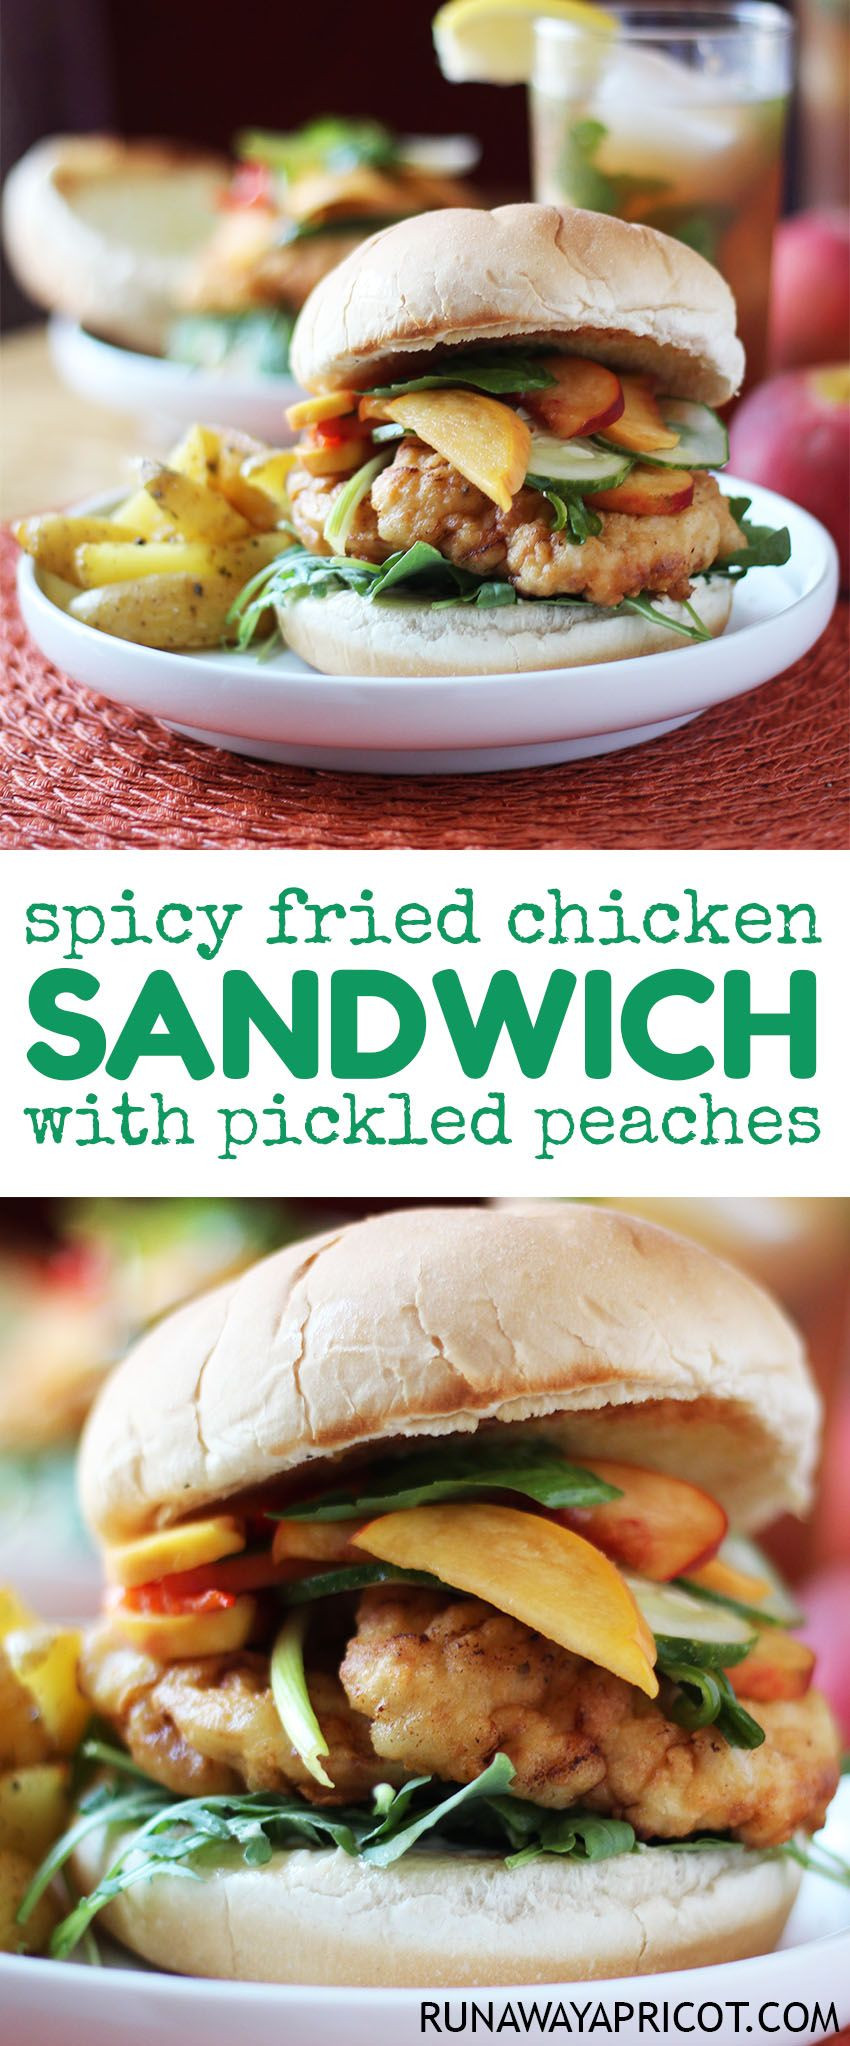 Spicy Fried Chicken Sandwich Recipe
 Spicy Fried Chicken Sandwich with Pickled Peaches